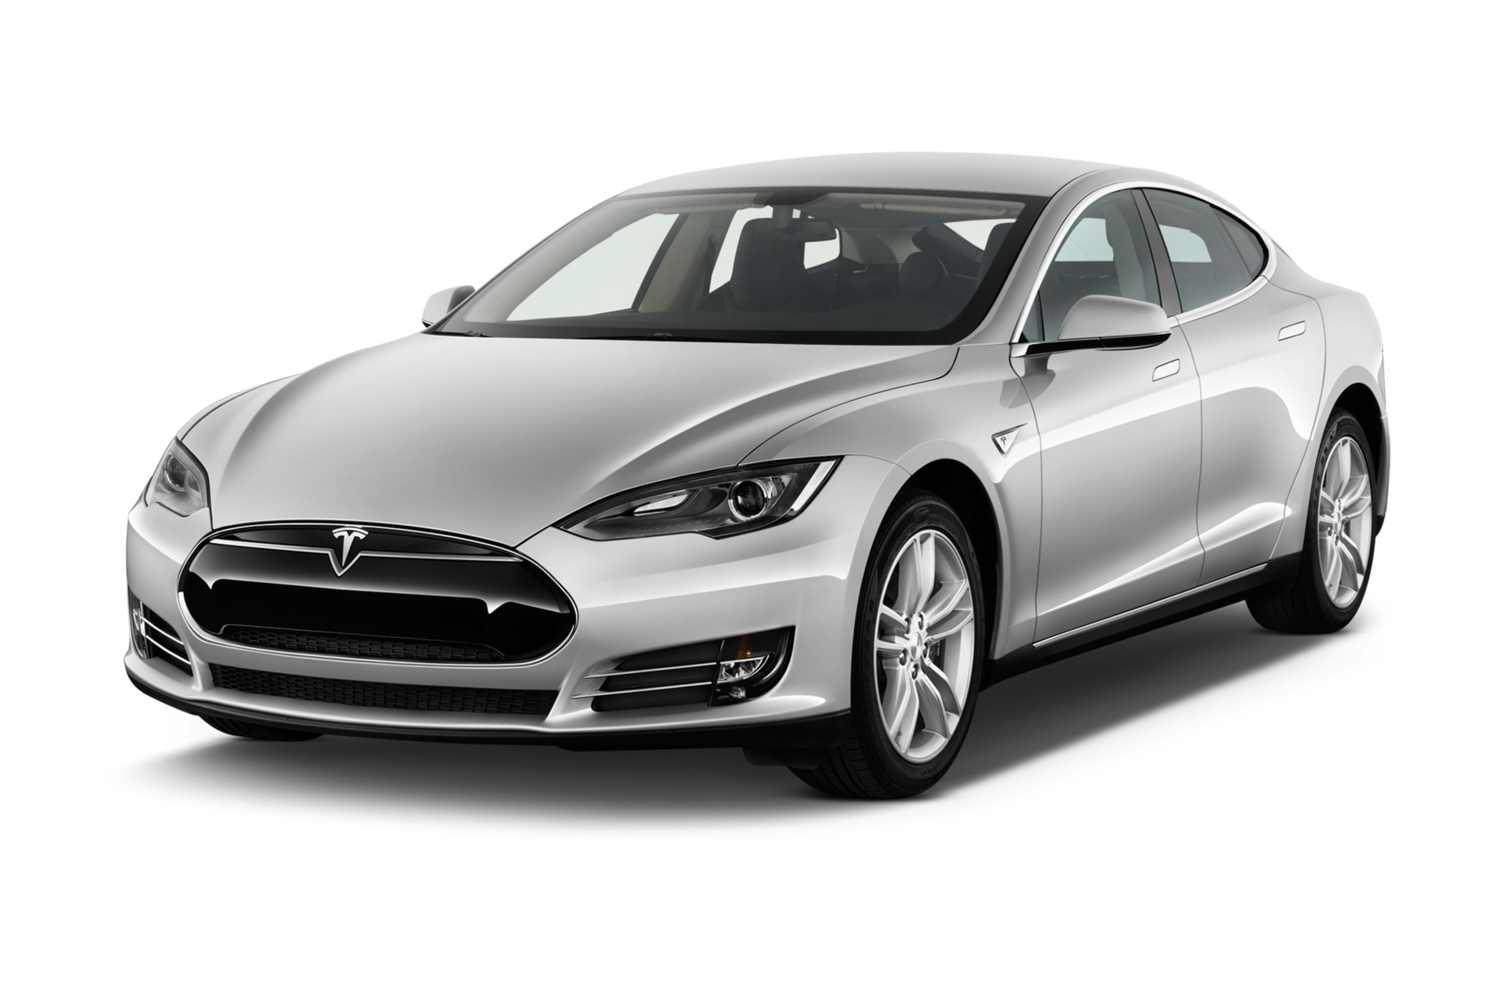 Tesla седан model s. Tesla model s 2012. Tesla model s 2023. Тесла модель s машина 2016 года. Модель s автомобиль